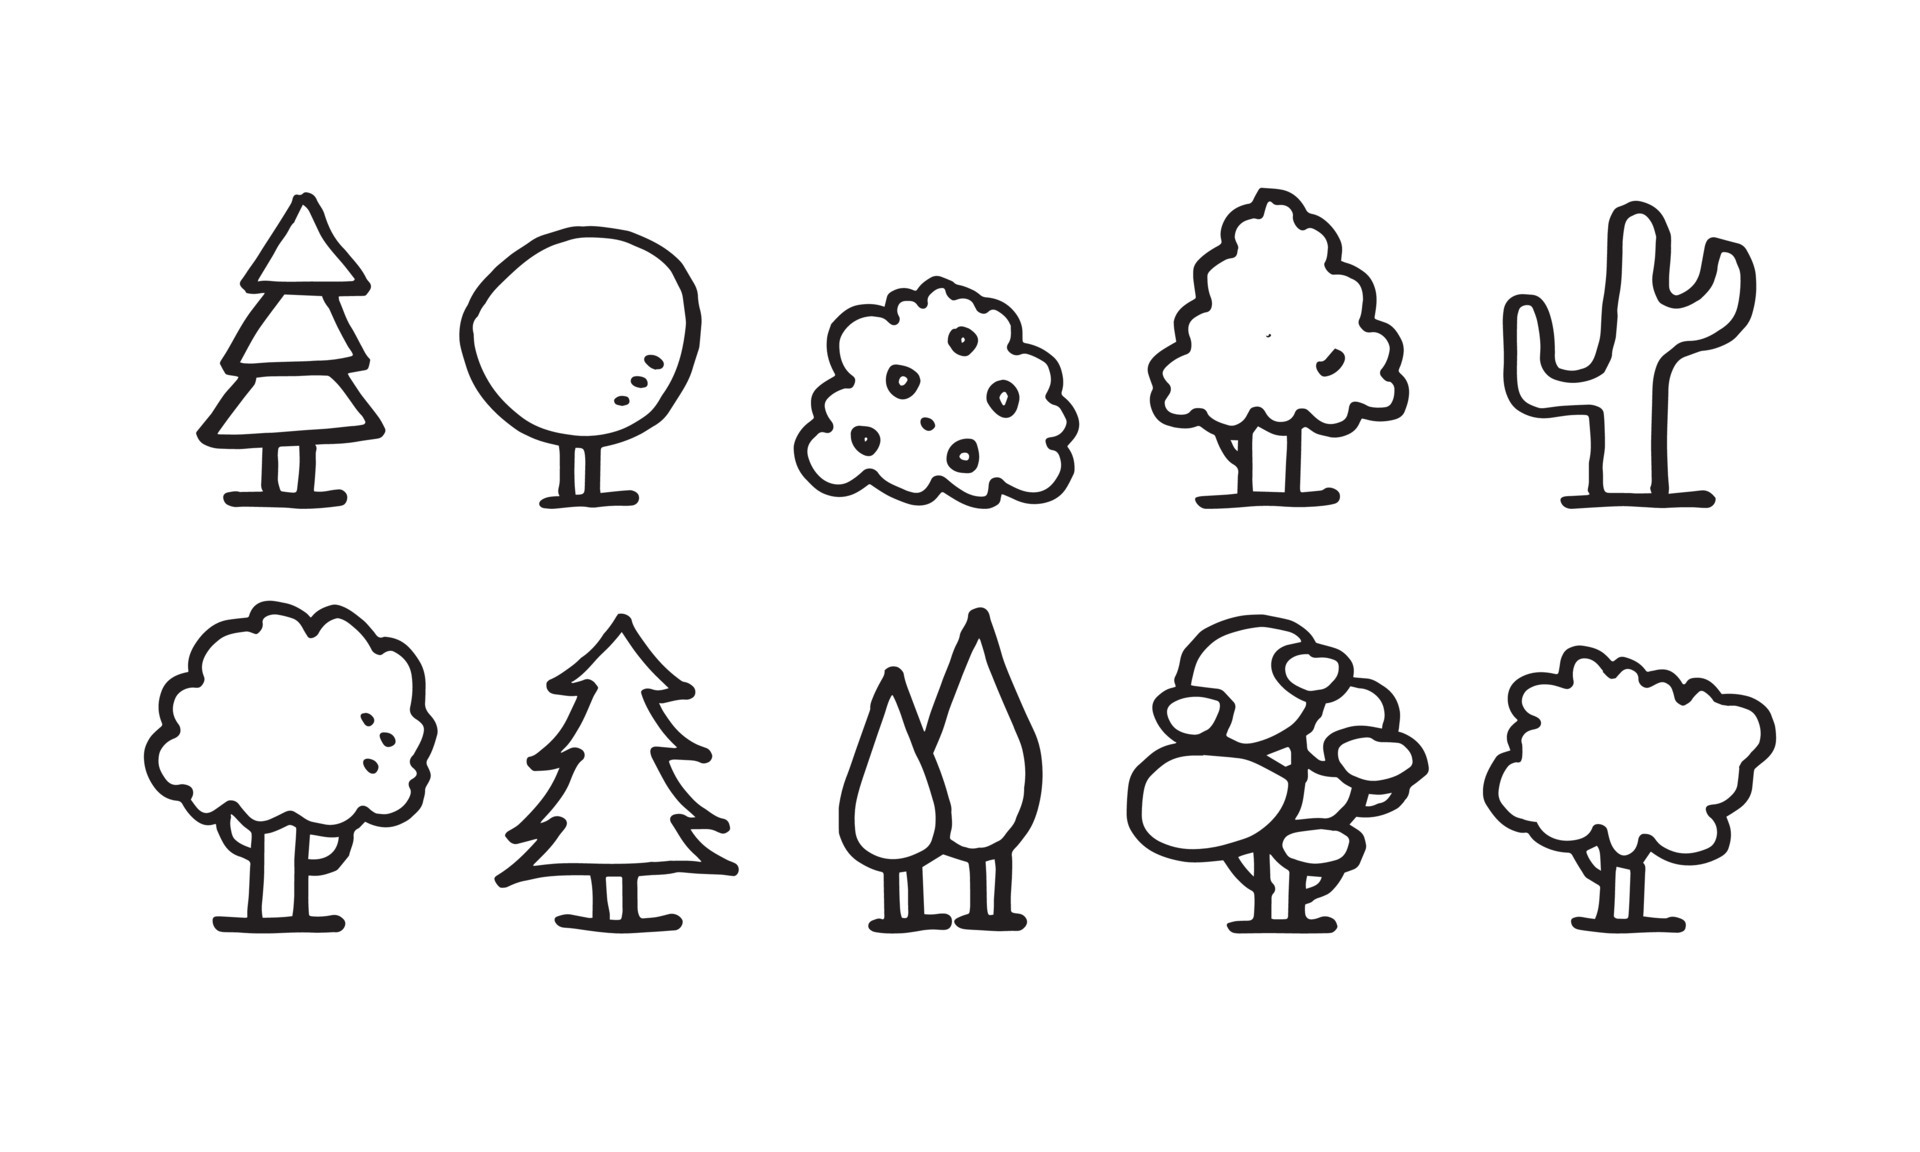 Tree Cartoon Icon Sketch Fast Pencil Stock Vector Royalty Free 120857536   Shutterstock